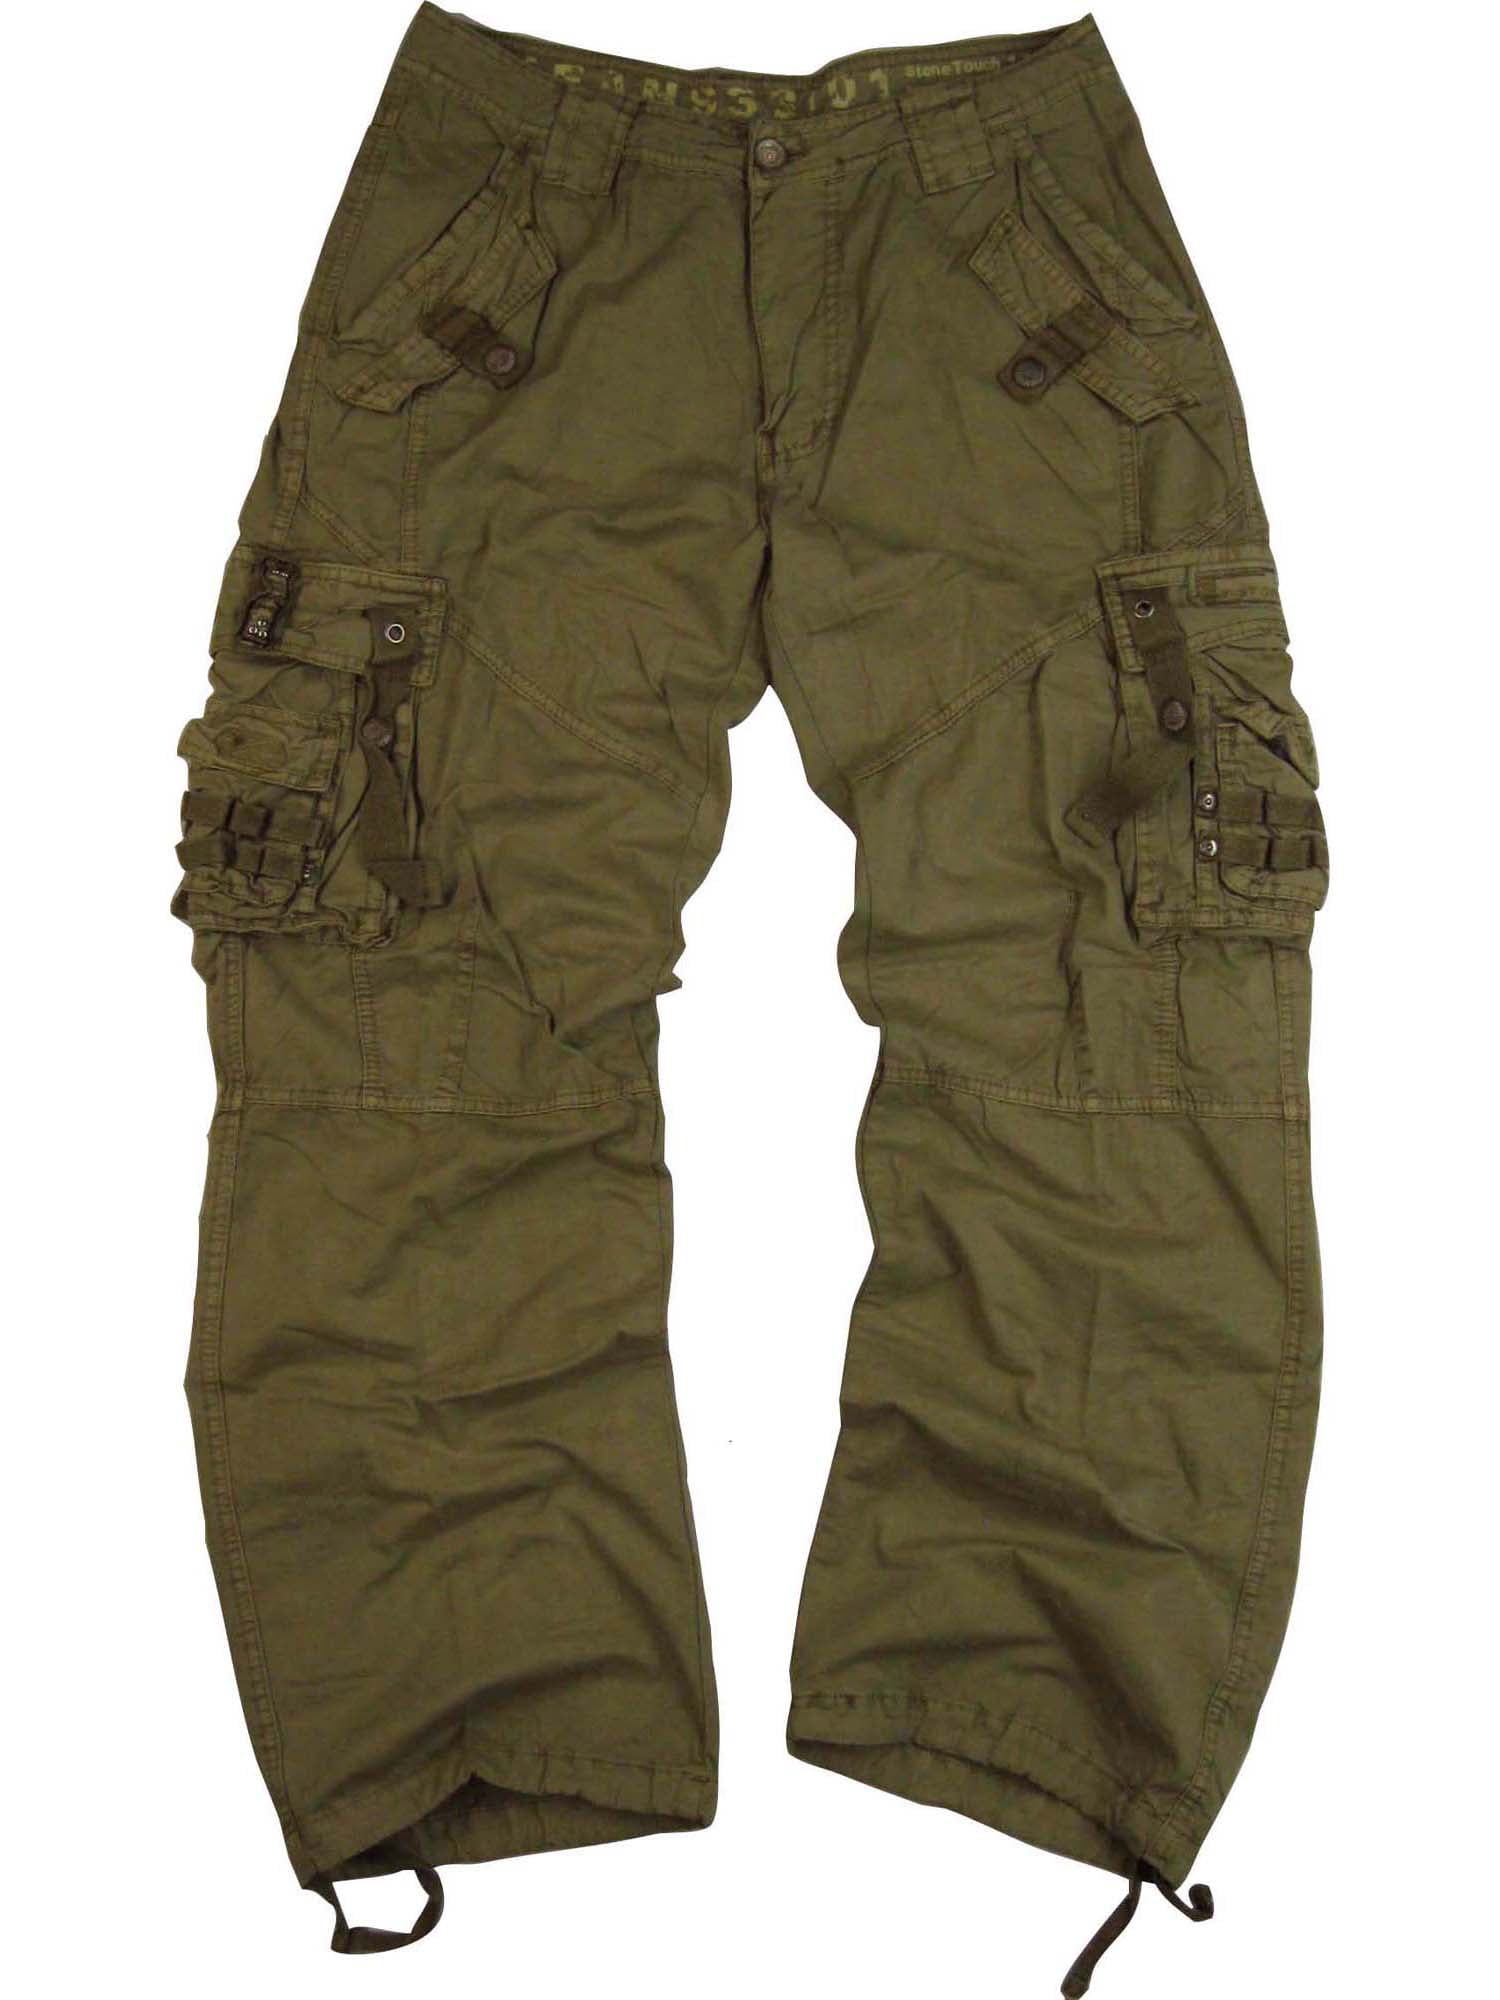 Men's Military Cargo Pants Plus Size 42x32 Khaki #12211 - Walmart.com ...